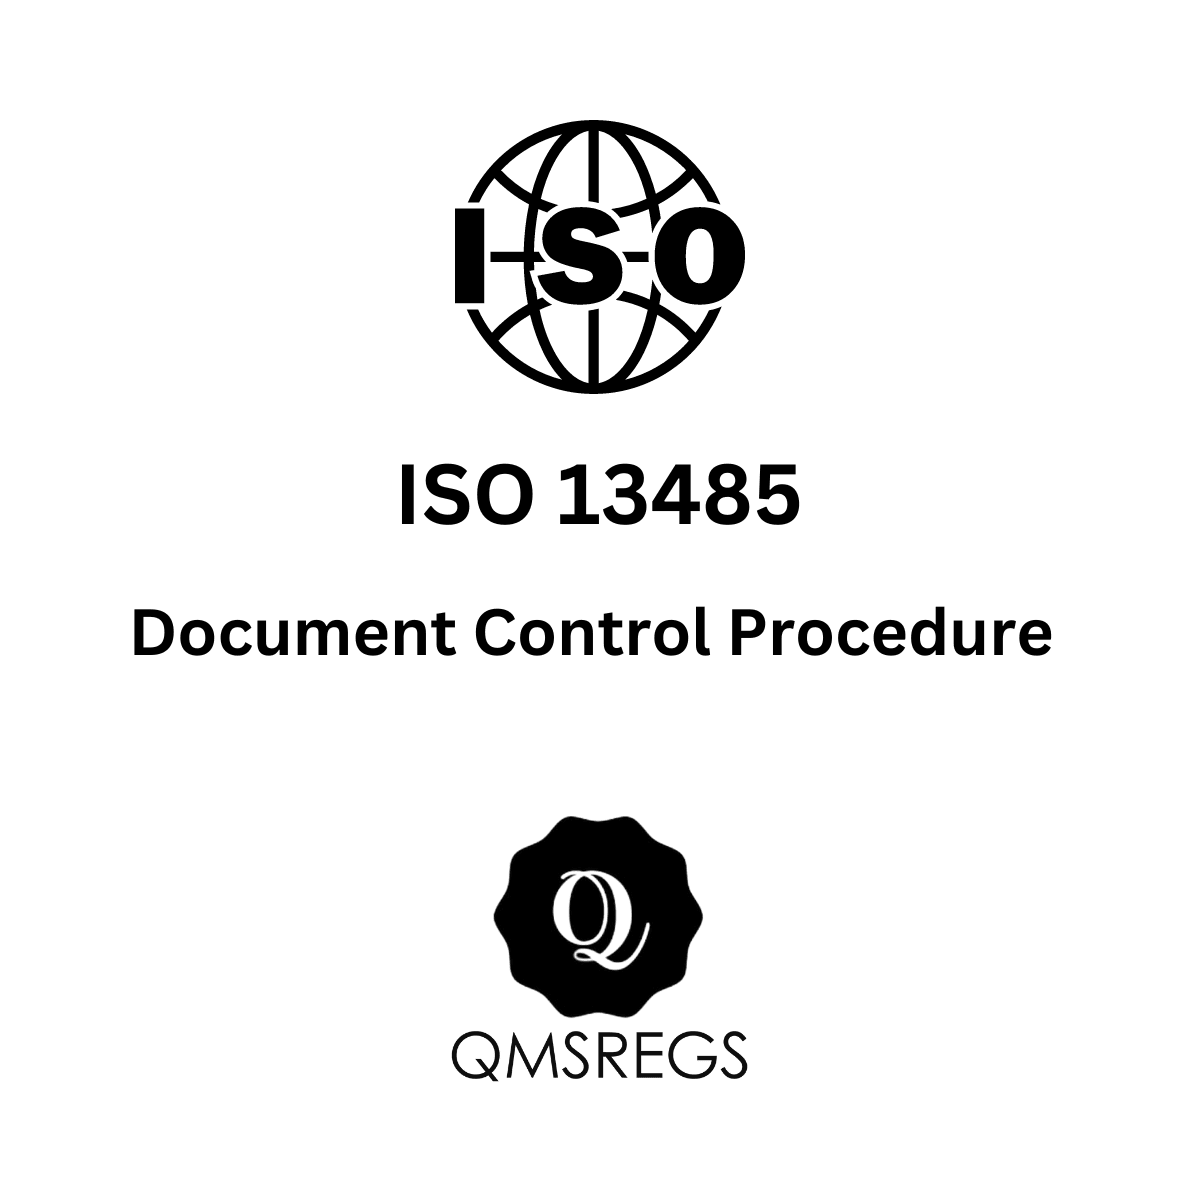 ISO 13485 Document Control Procedure Template